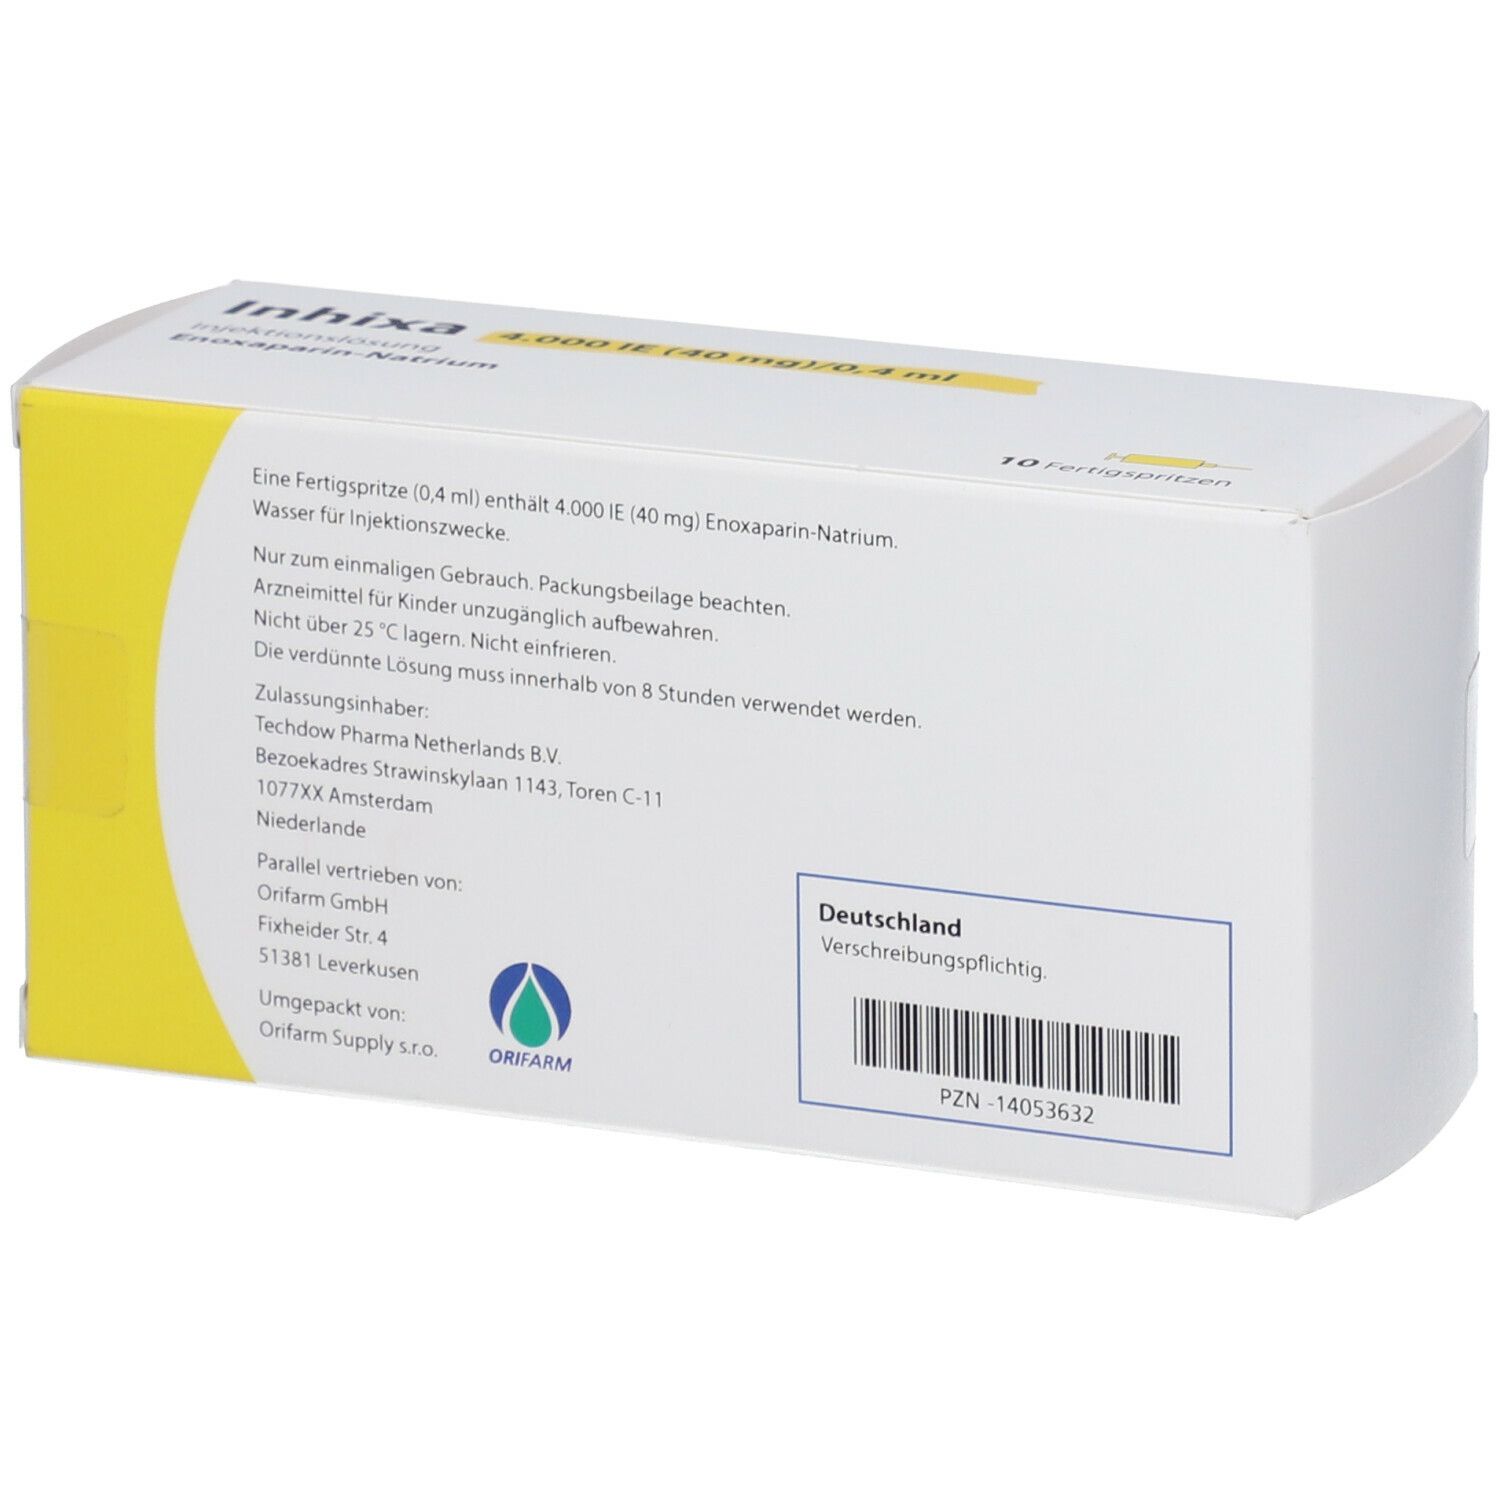 Inhixa 4.000 I.E. 40 mg/0,4 ml